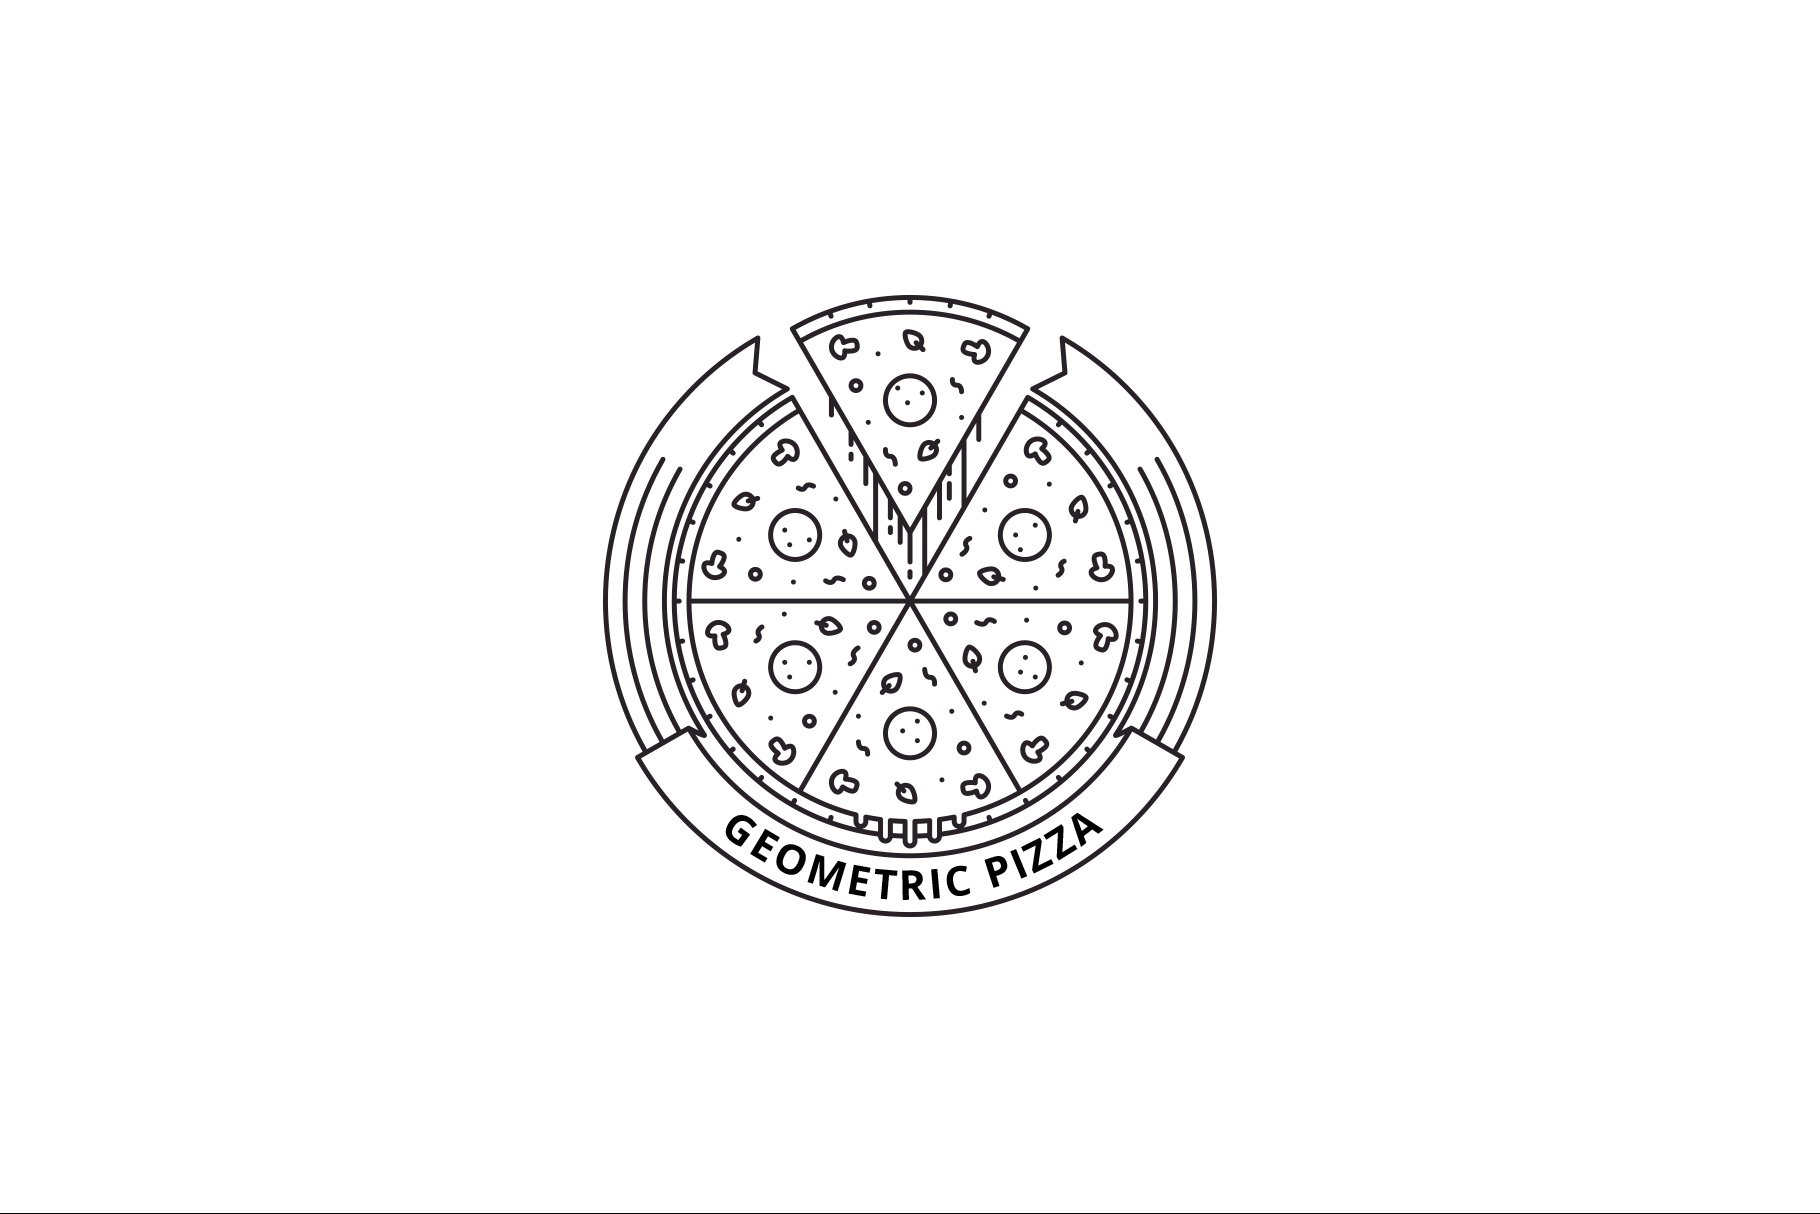 Geometric Pizza Logo preview image.